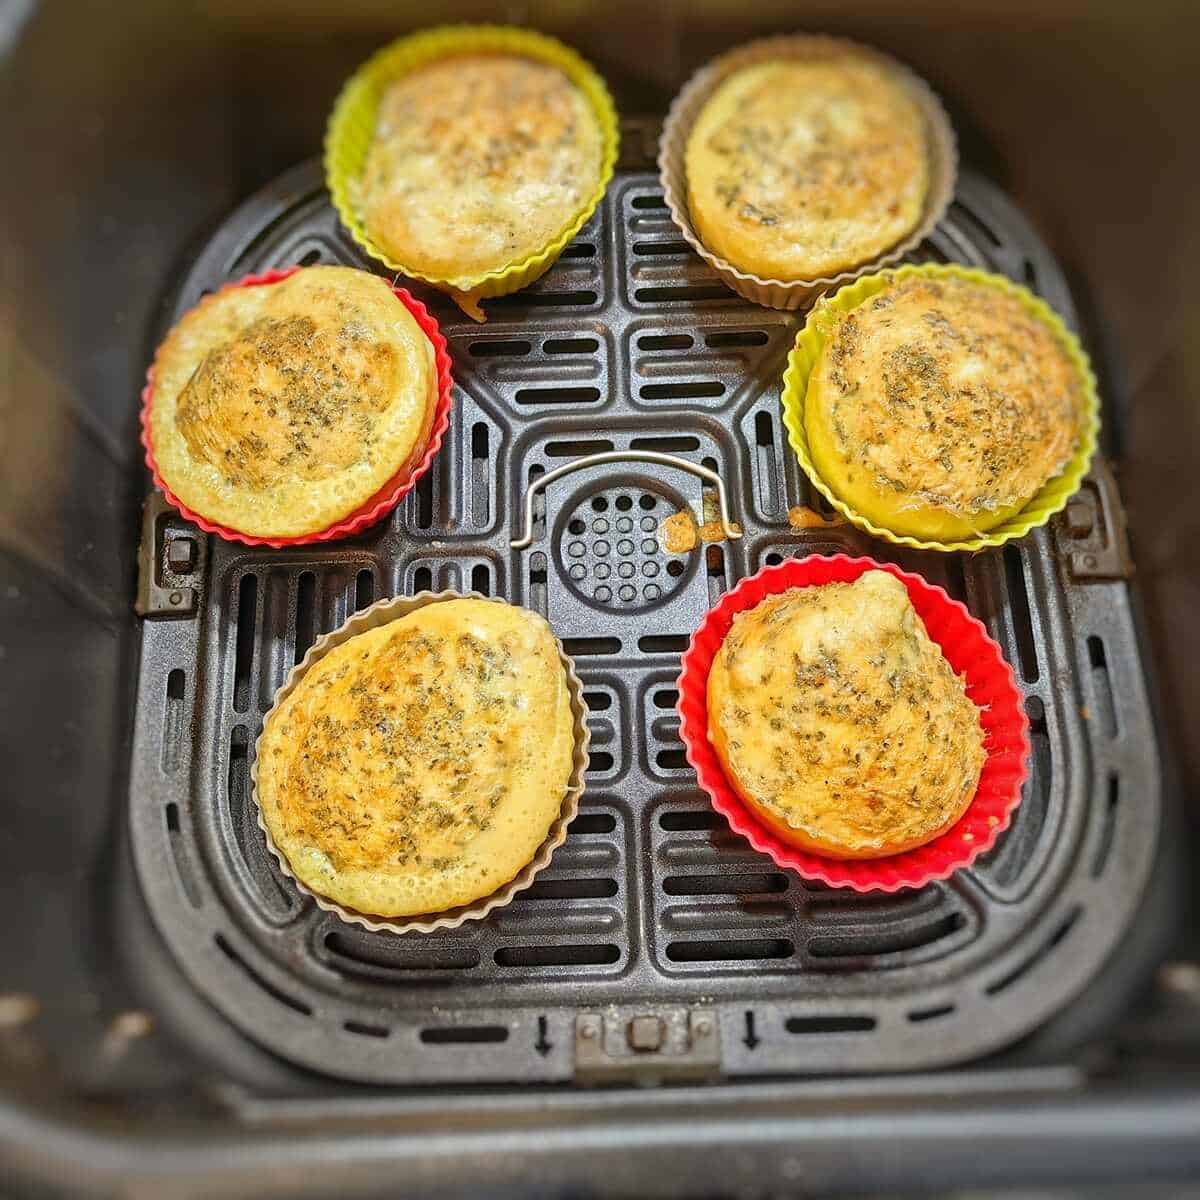 baked egg bites insider air fryer basket